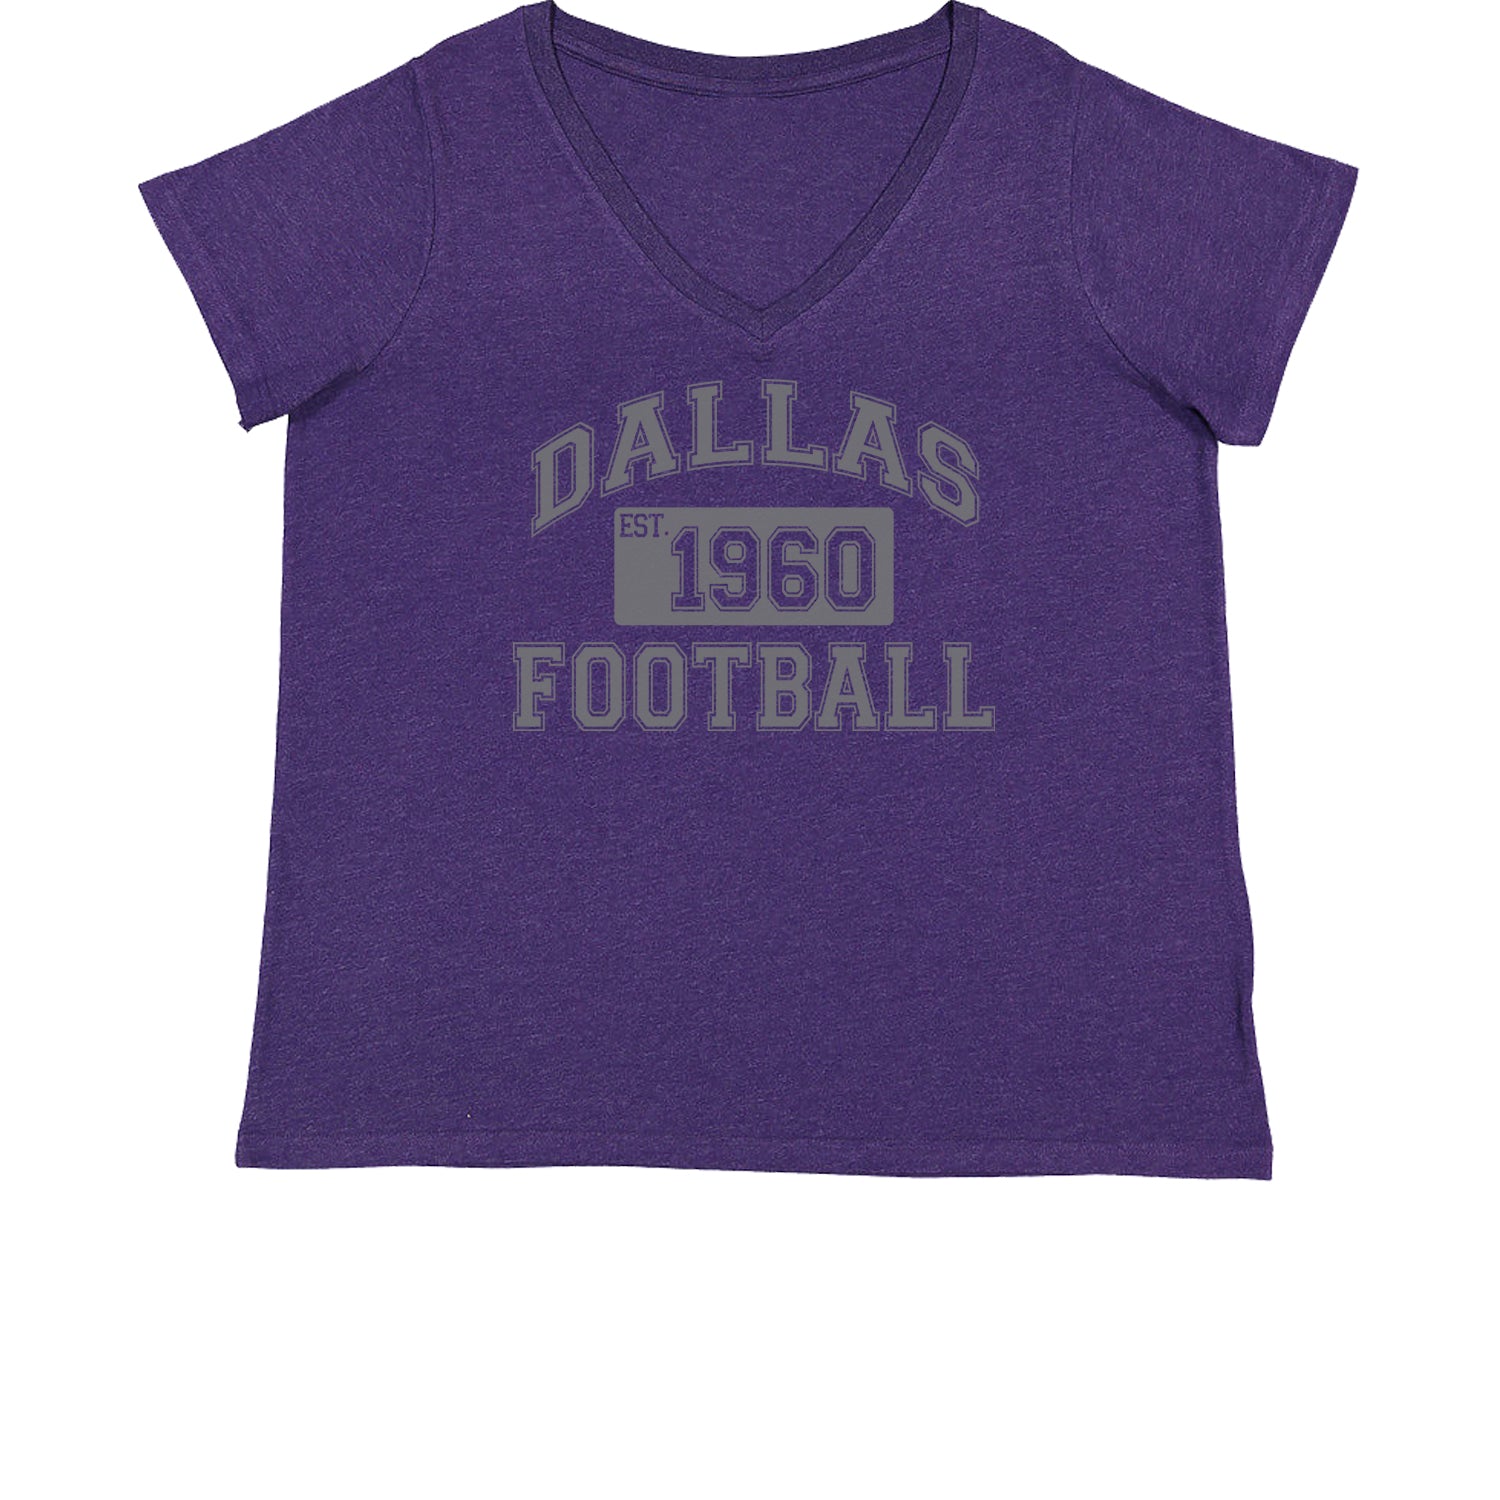 Dallas Football Established 1960 Womens Plus Size V-Neck T-shirt boys, dem by Expression Tees